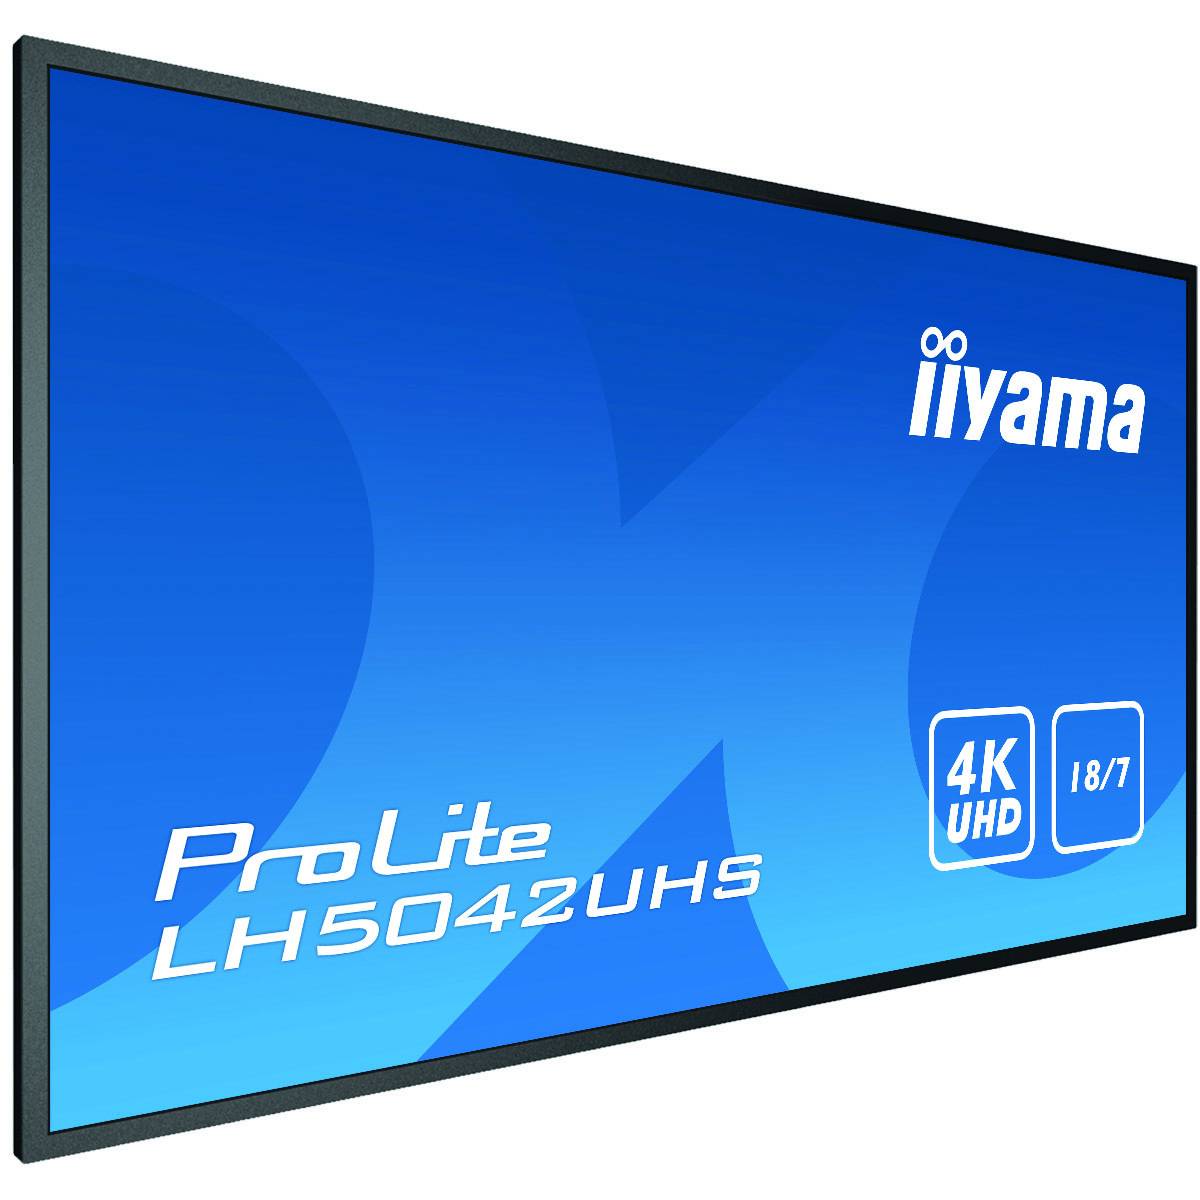 Rca Informatique - image du produit : 50 IN 3840X2160 4K UHD IPS PANEL (DISPLAYPORT DVI HDMI) 500